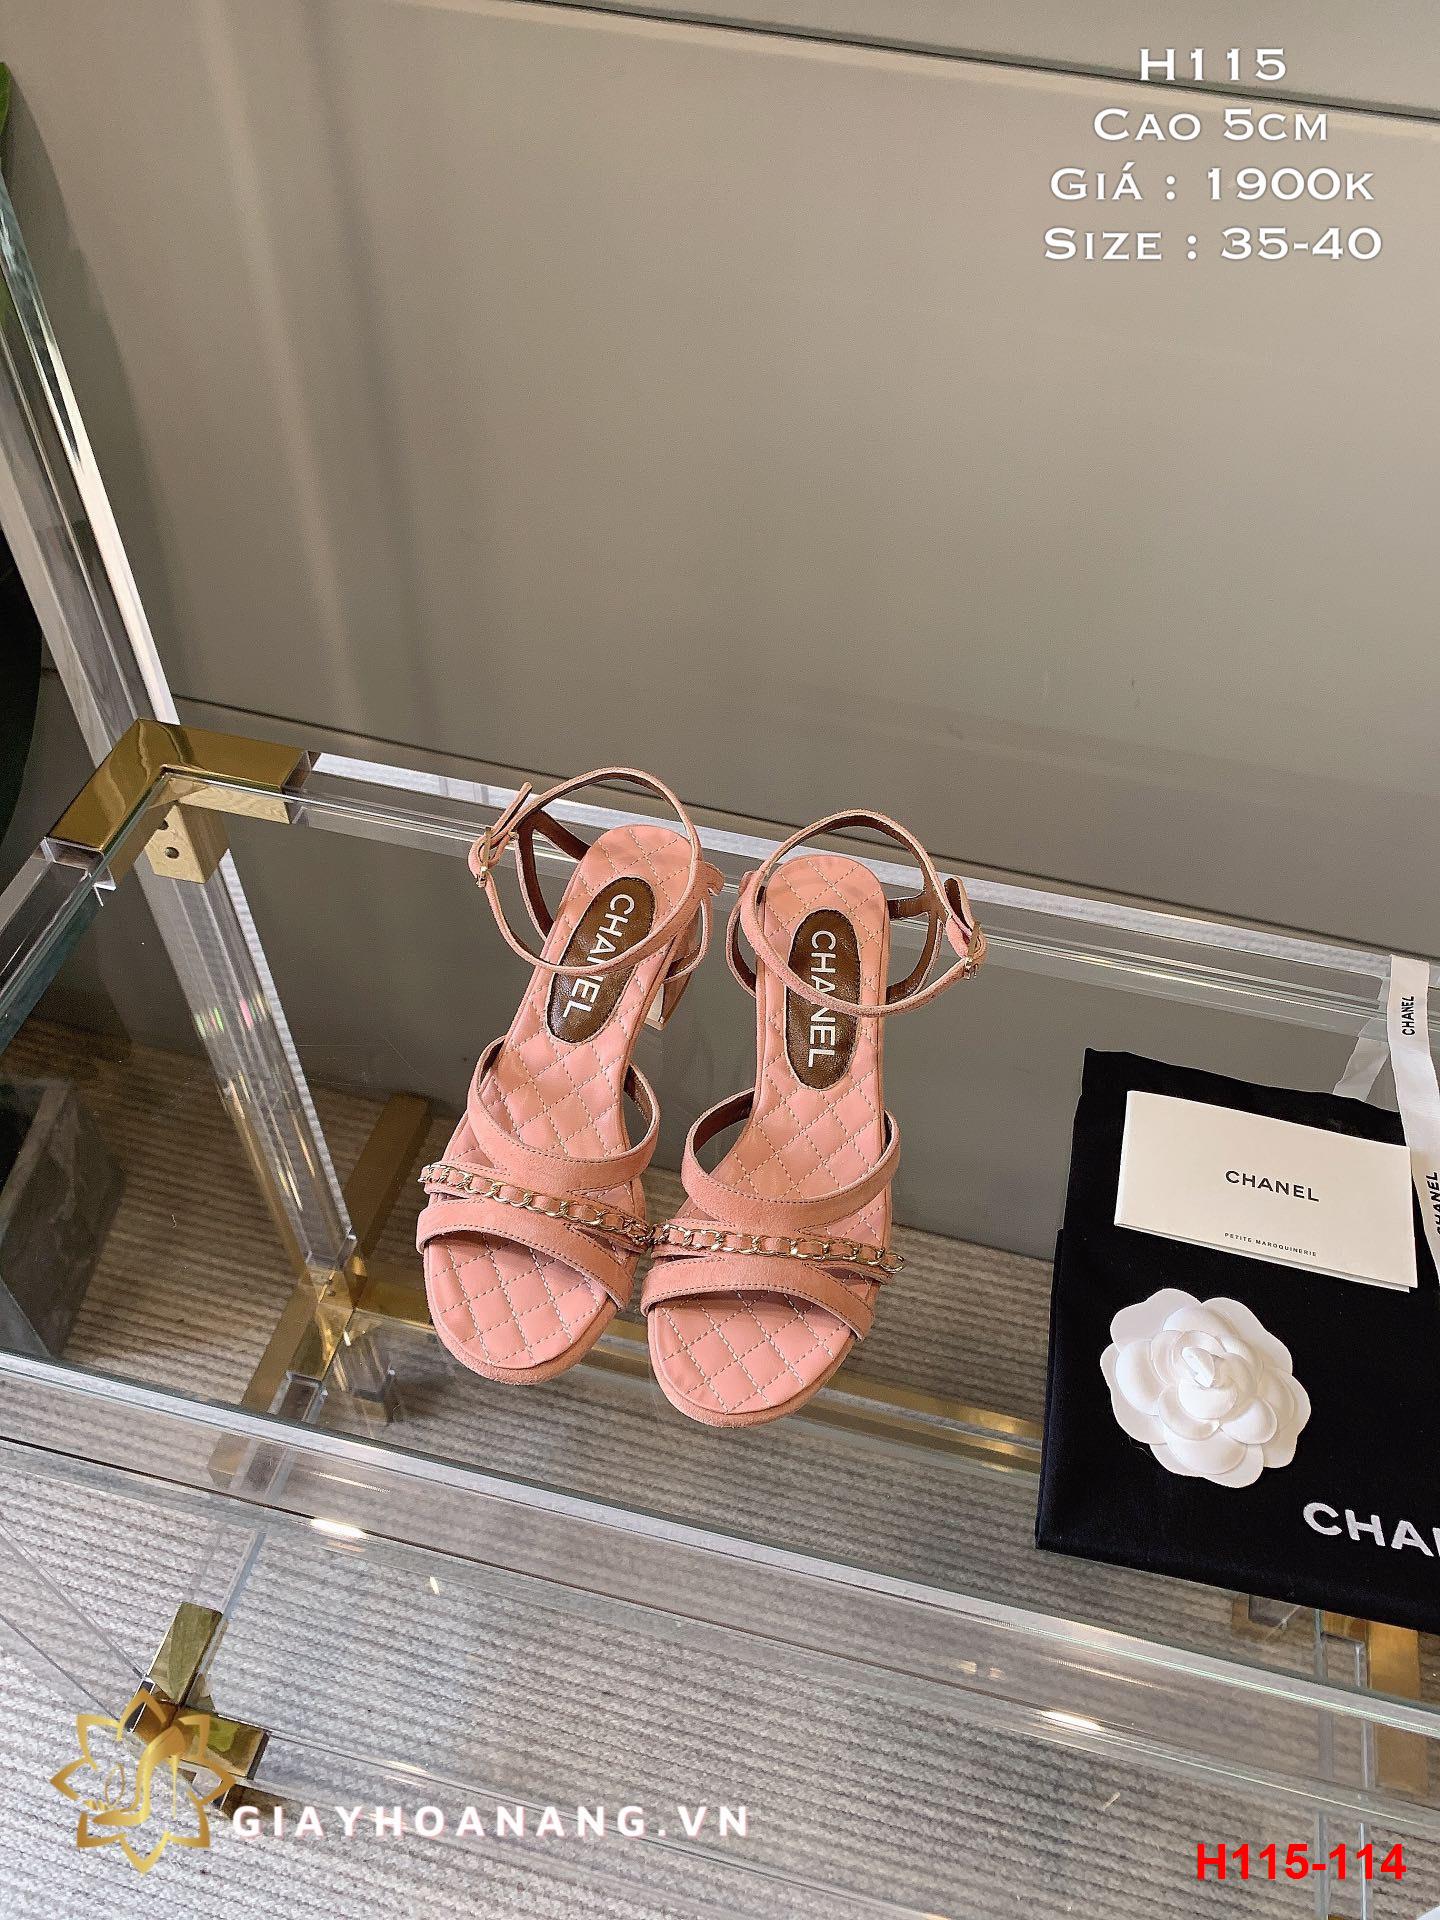 H115-114 Chanel sandal cao 5cm siêu cấp